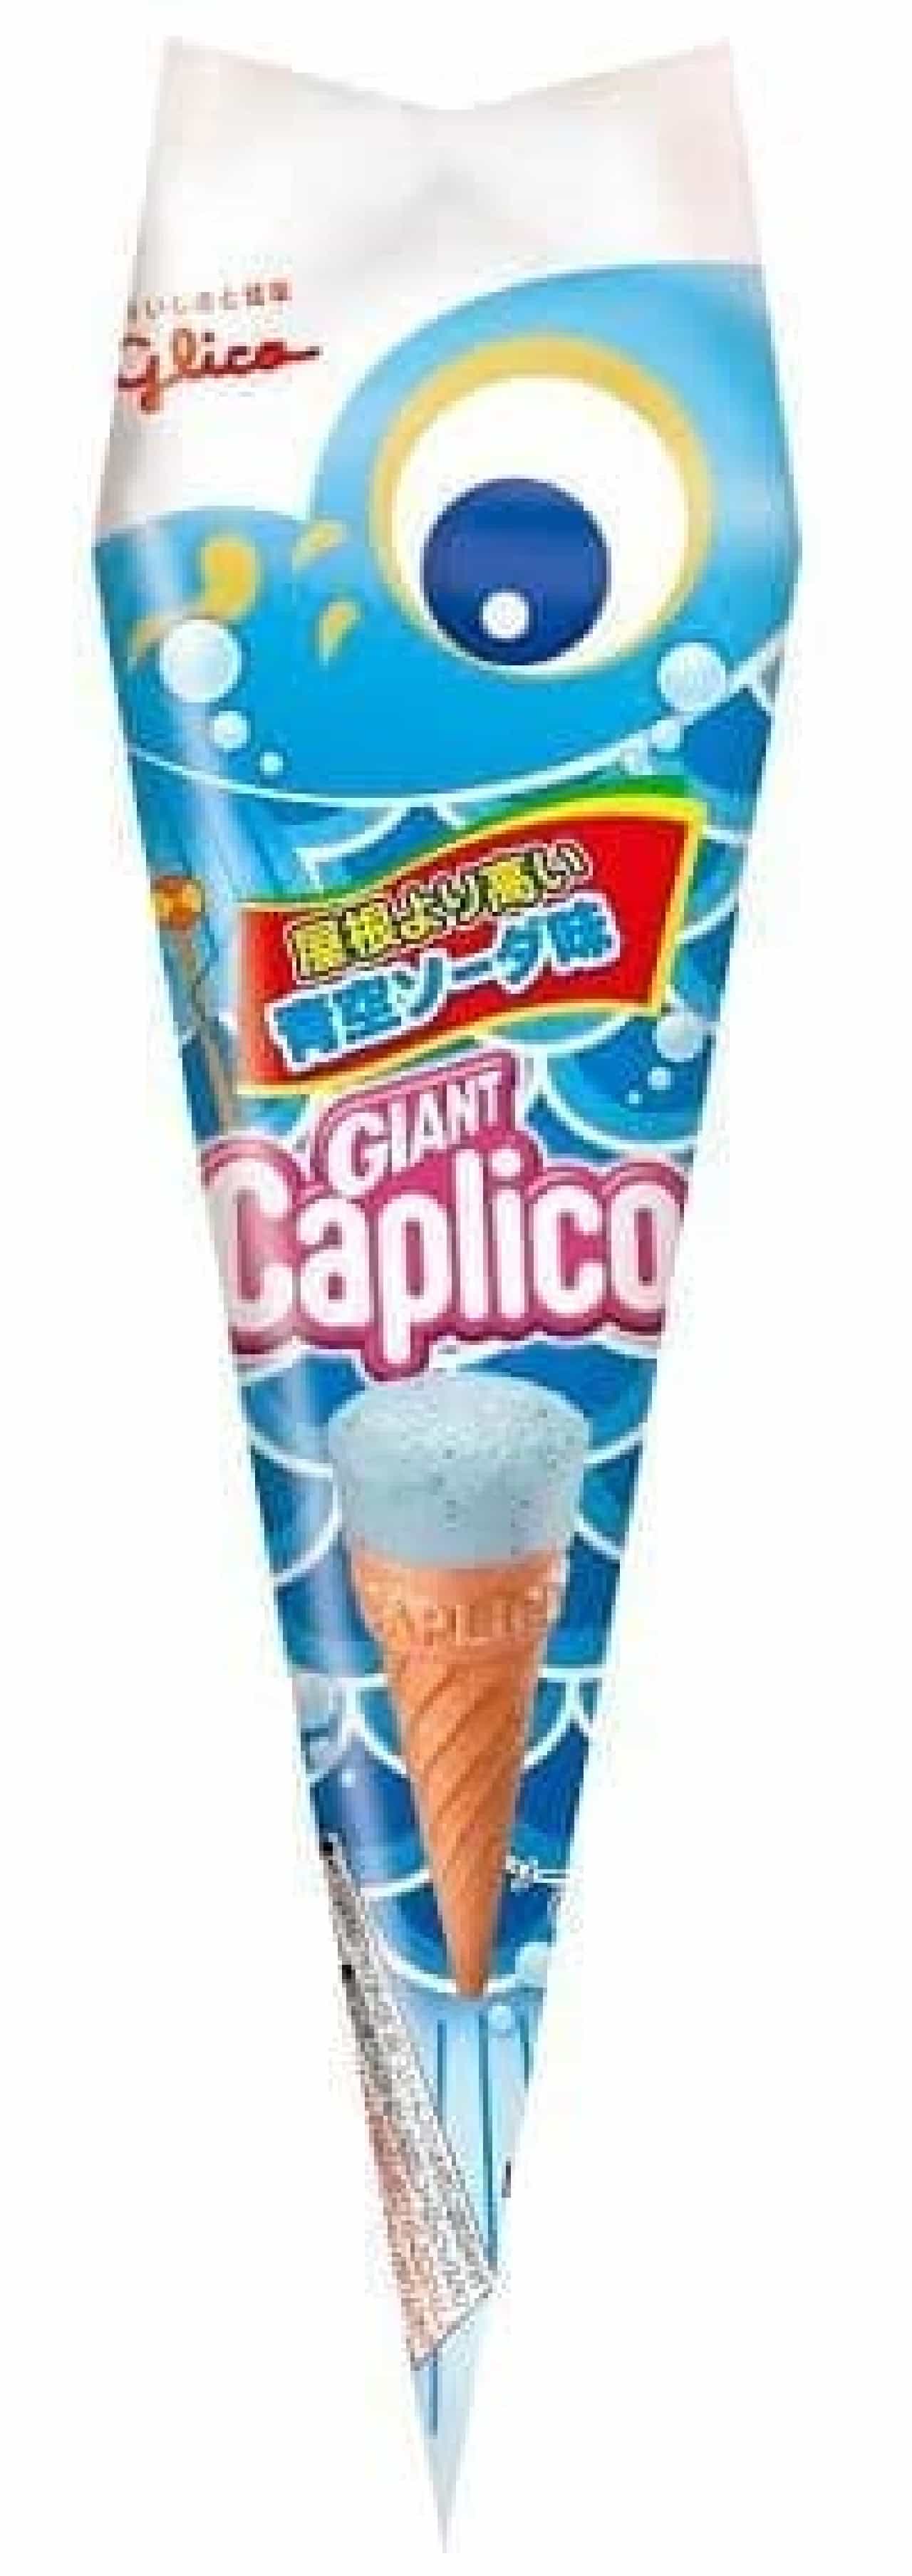 Ezaki Glico "Giant Caprico [Blue Sky Soda Flavor]"